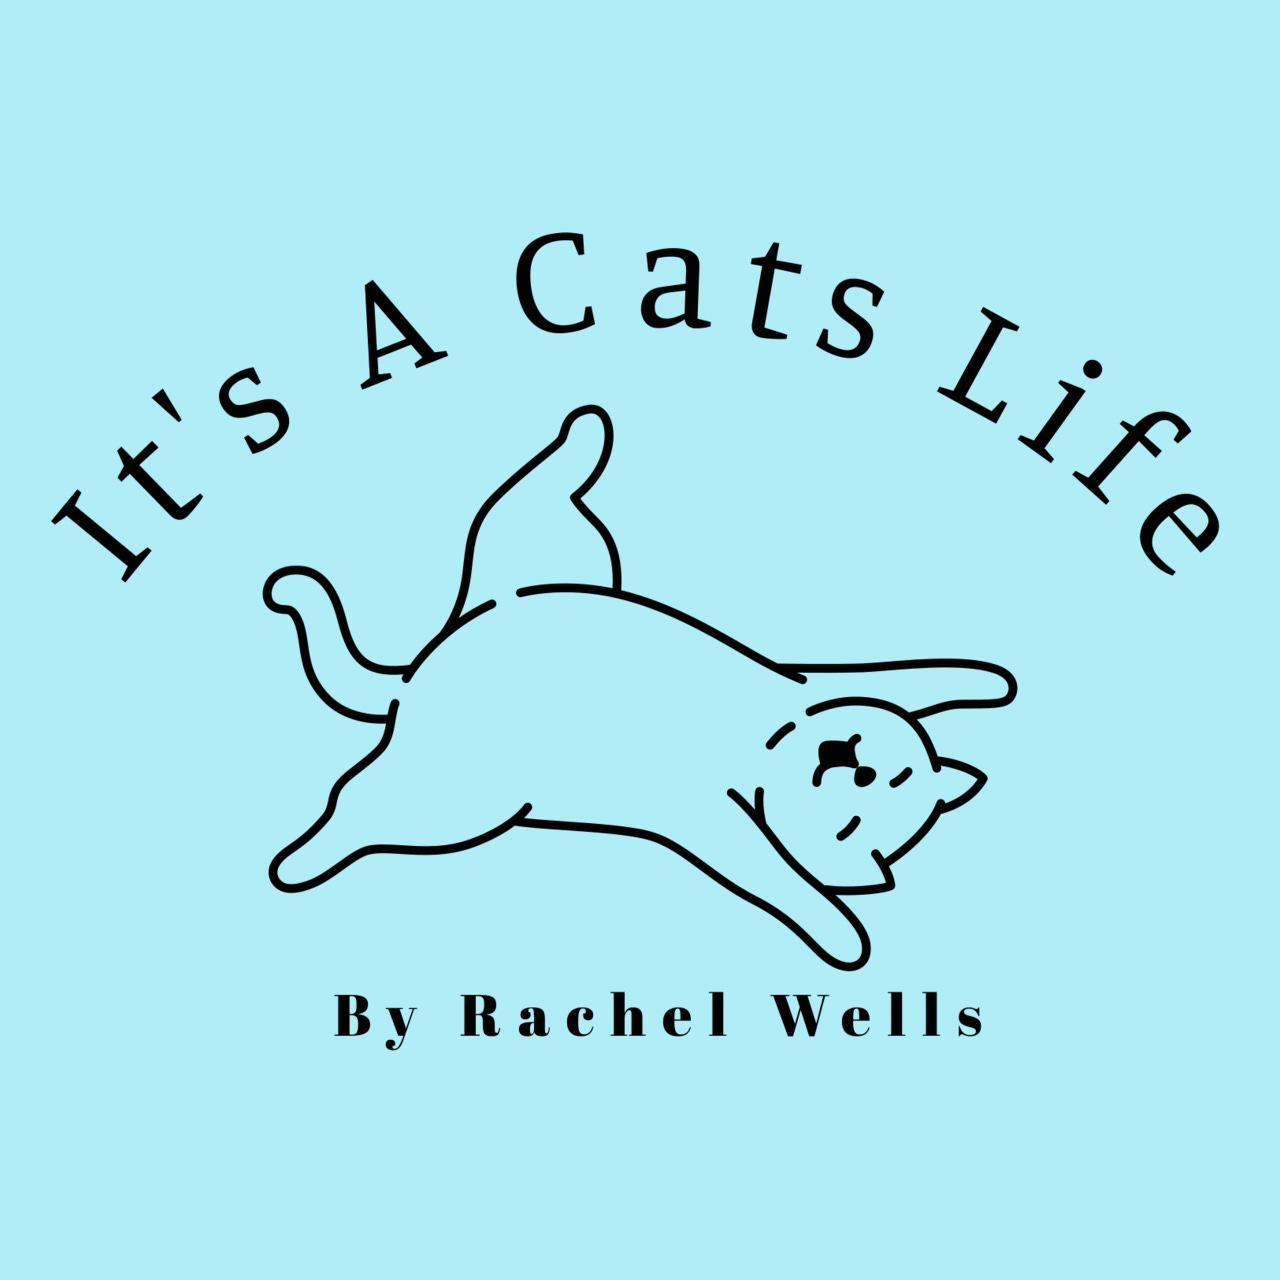 It's A Cat's Life by Rachel Wells